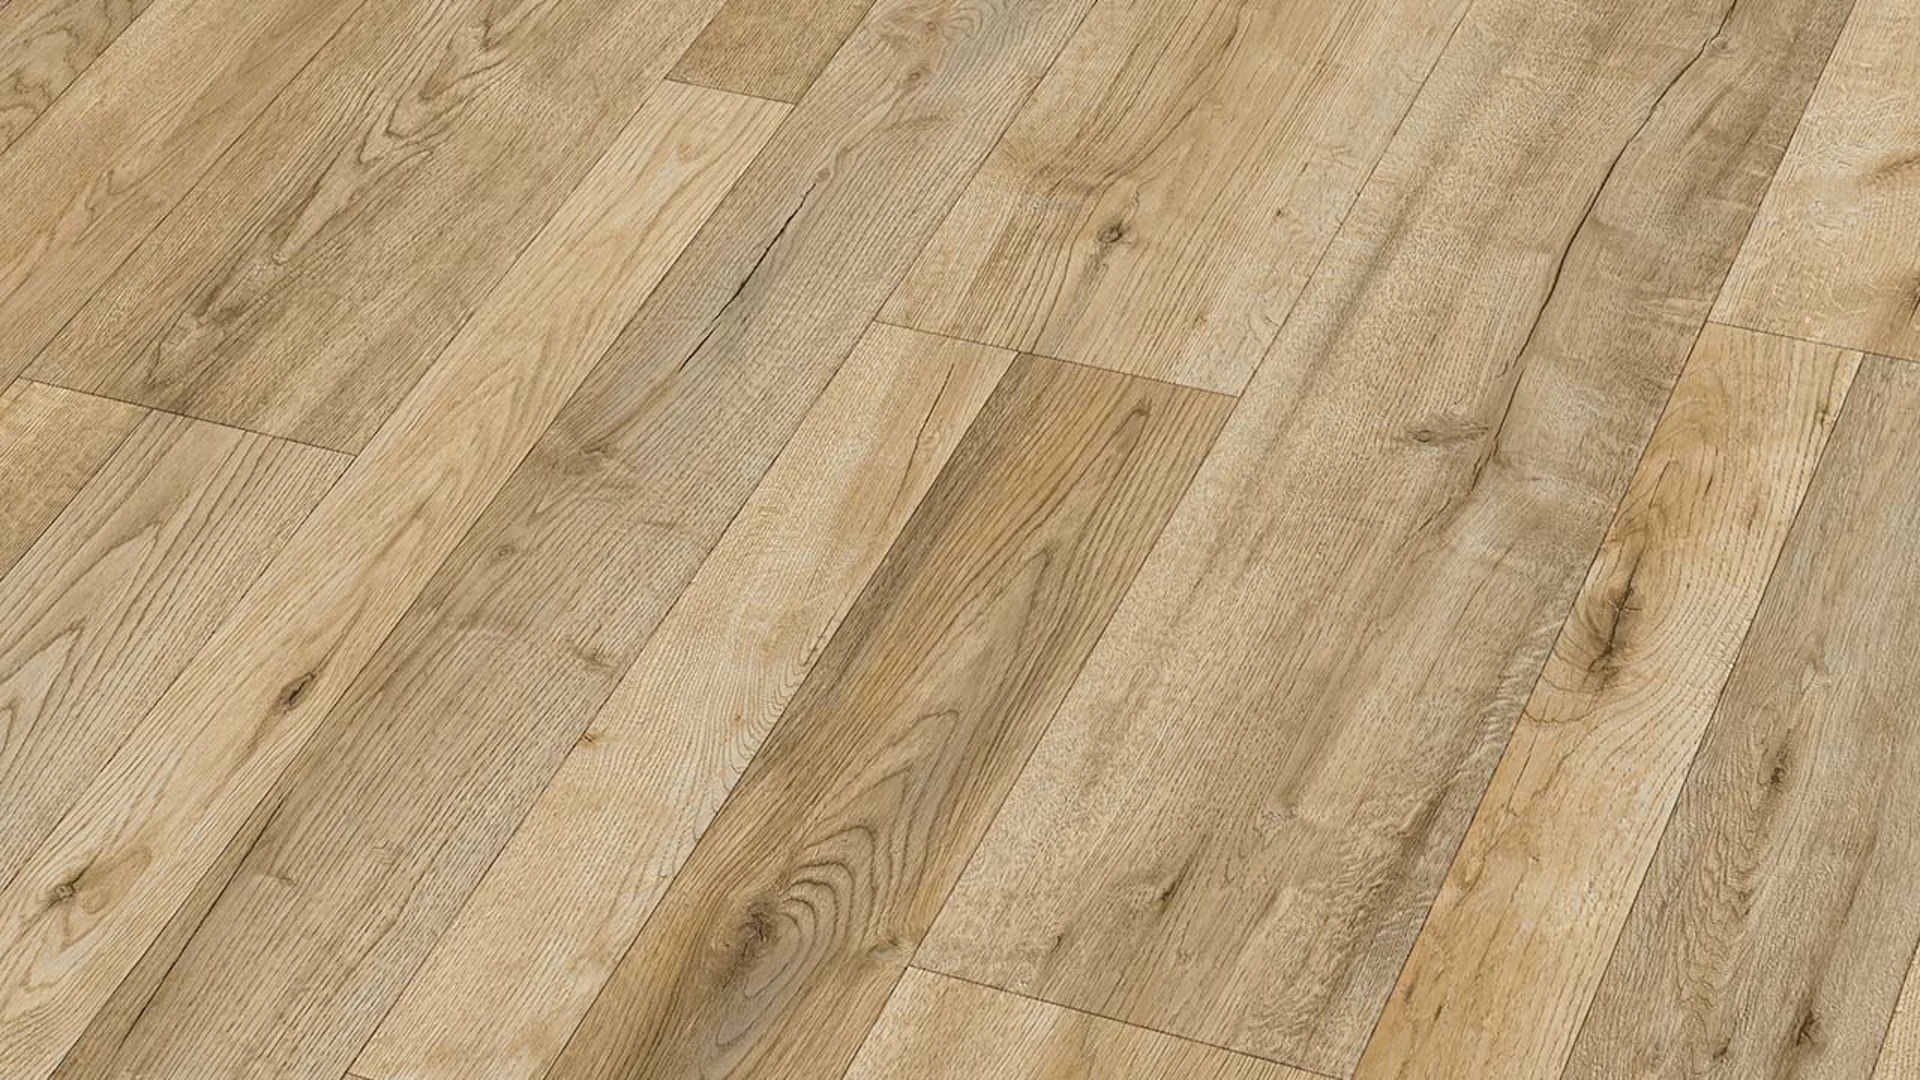 MEISTER Laminate flooring - MeisterDesign LD 55 Oak Bayfield 6679 (600015-1288198-06679)